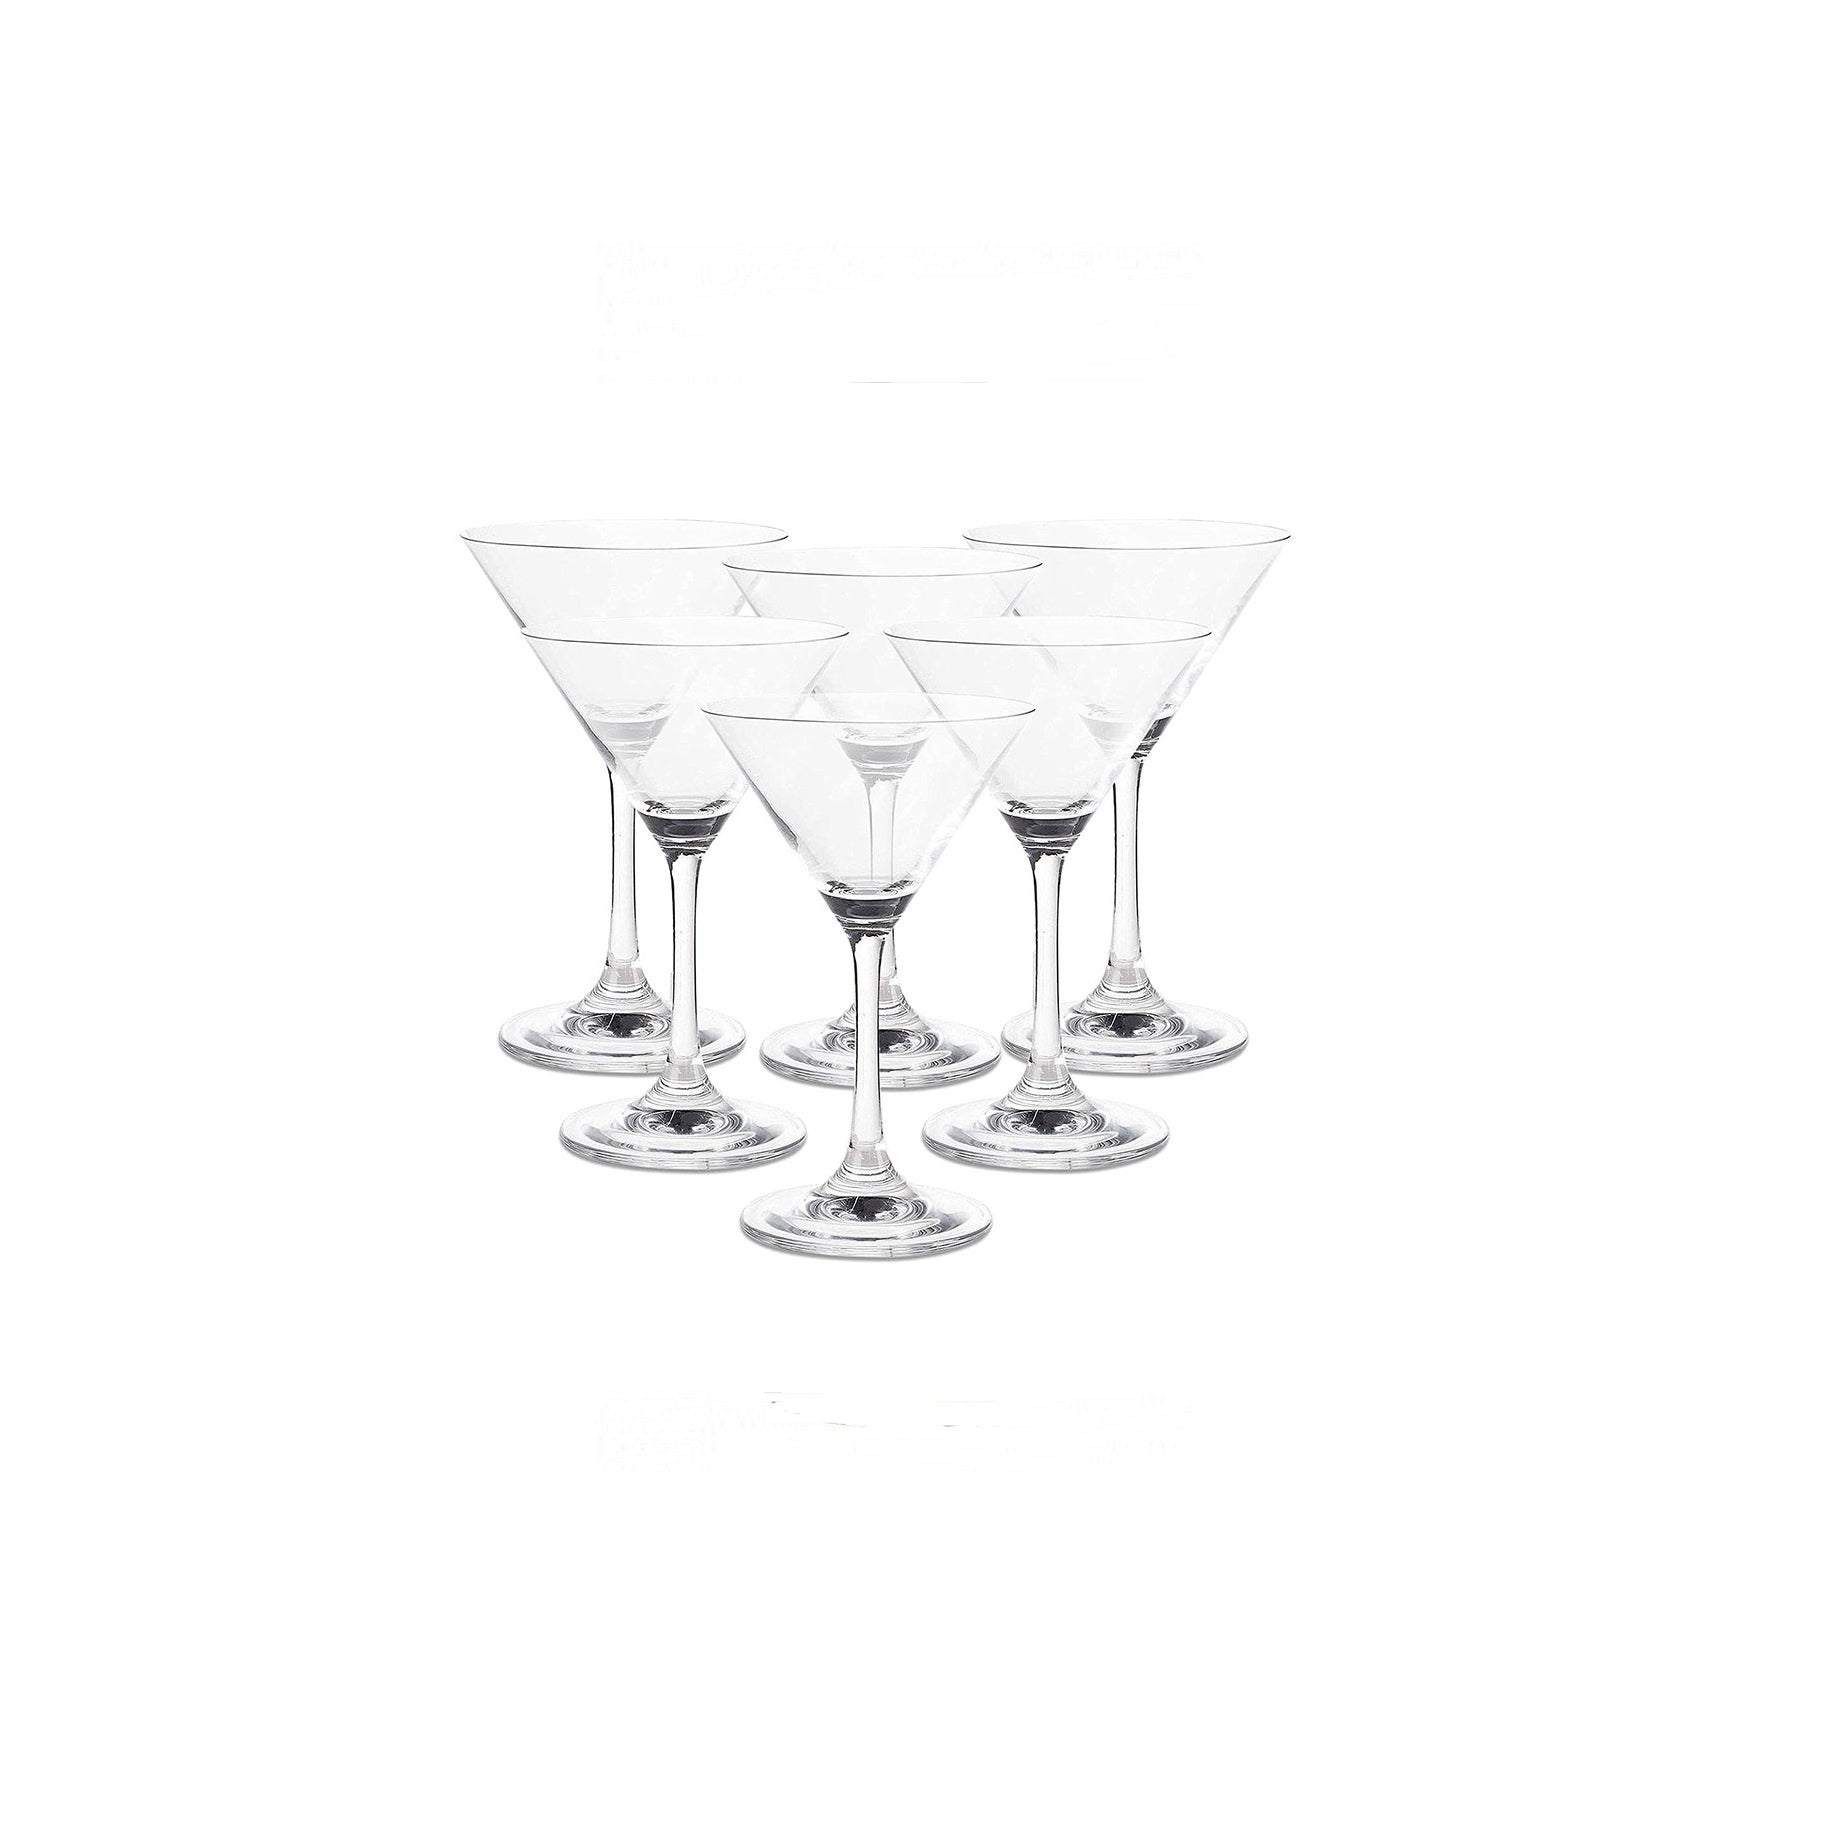 https://www.saveur.com/uploads/2021/09/17/The-Best-Matini-Glass-Option-Set-of-6-Classic-Martini-Glasses.jpg?auto=webp